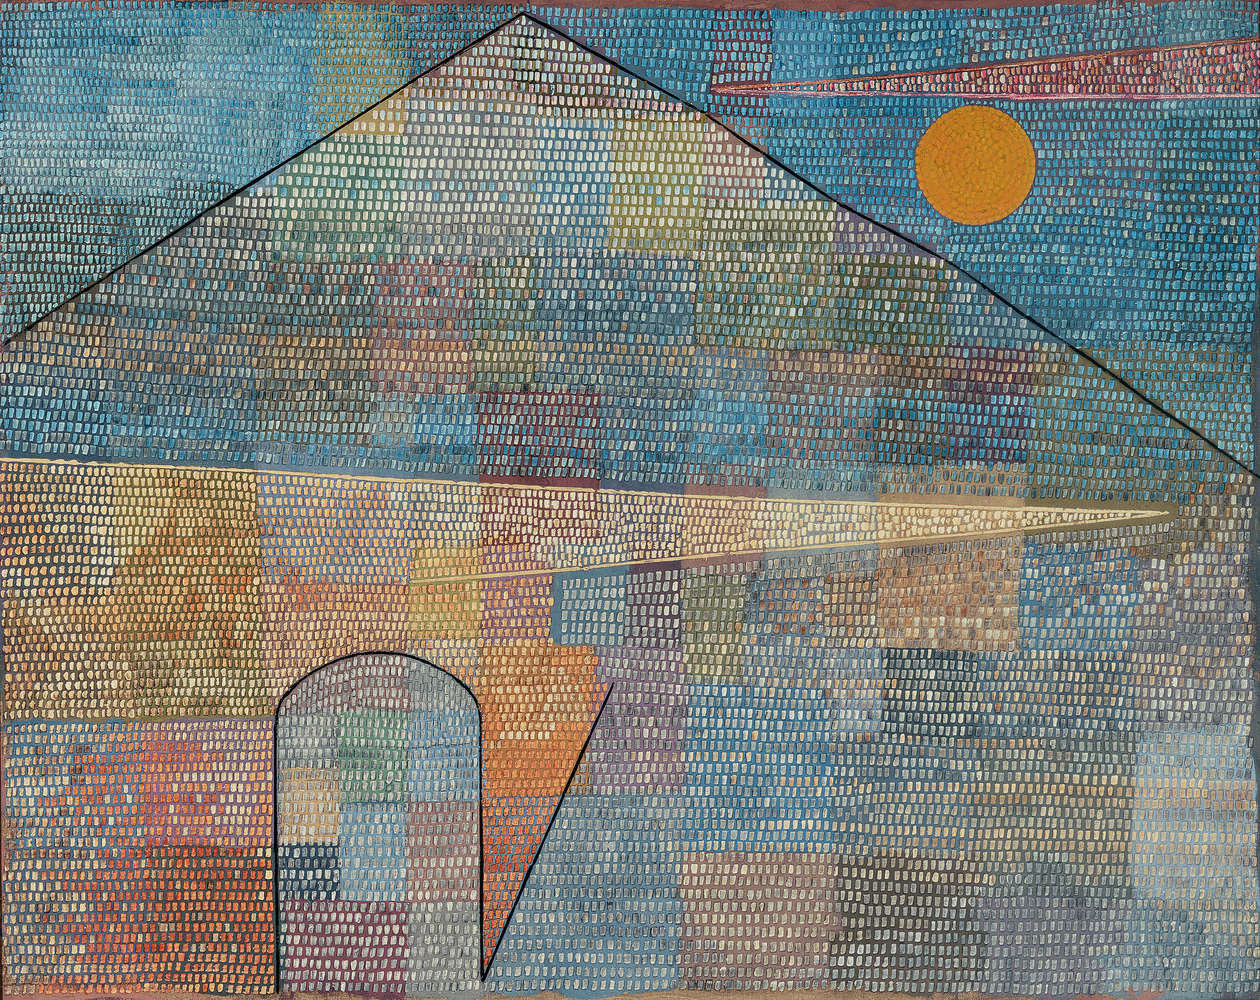             Papier peint panoramique "Ad Parnassum" de Paul Klee
        